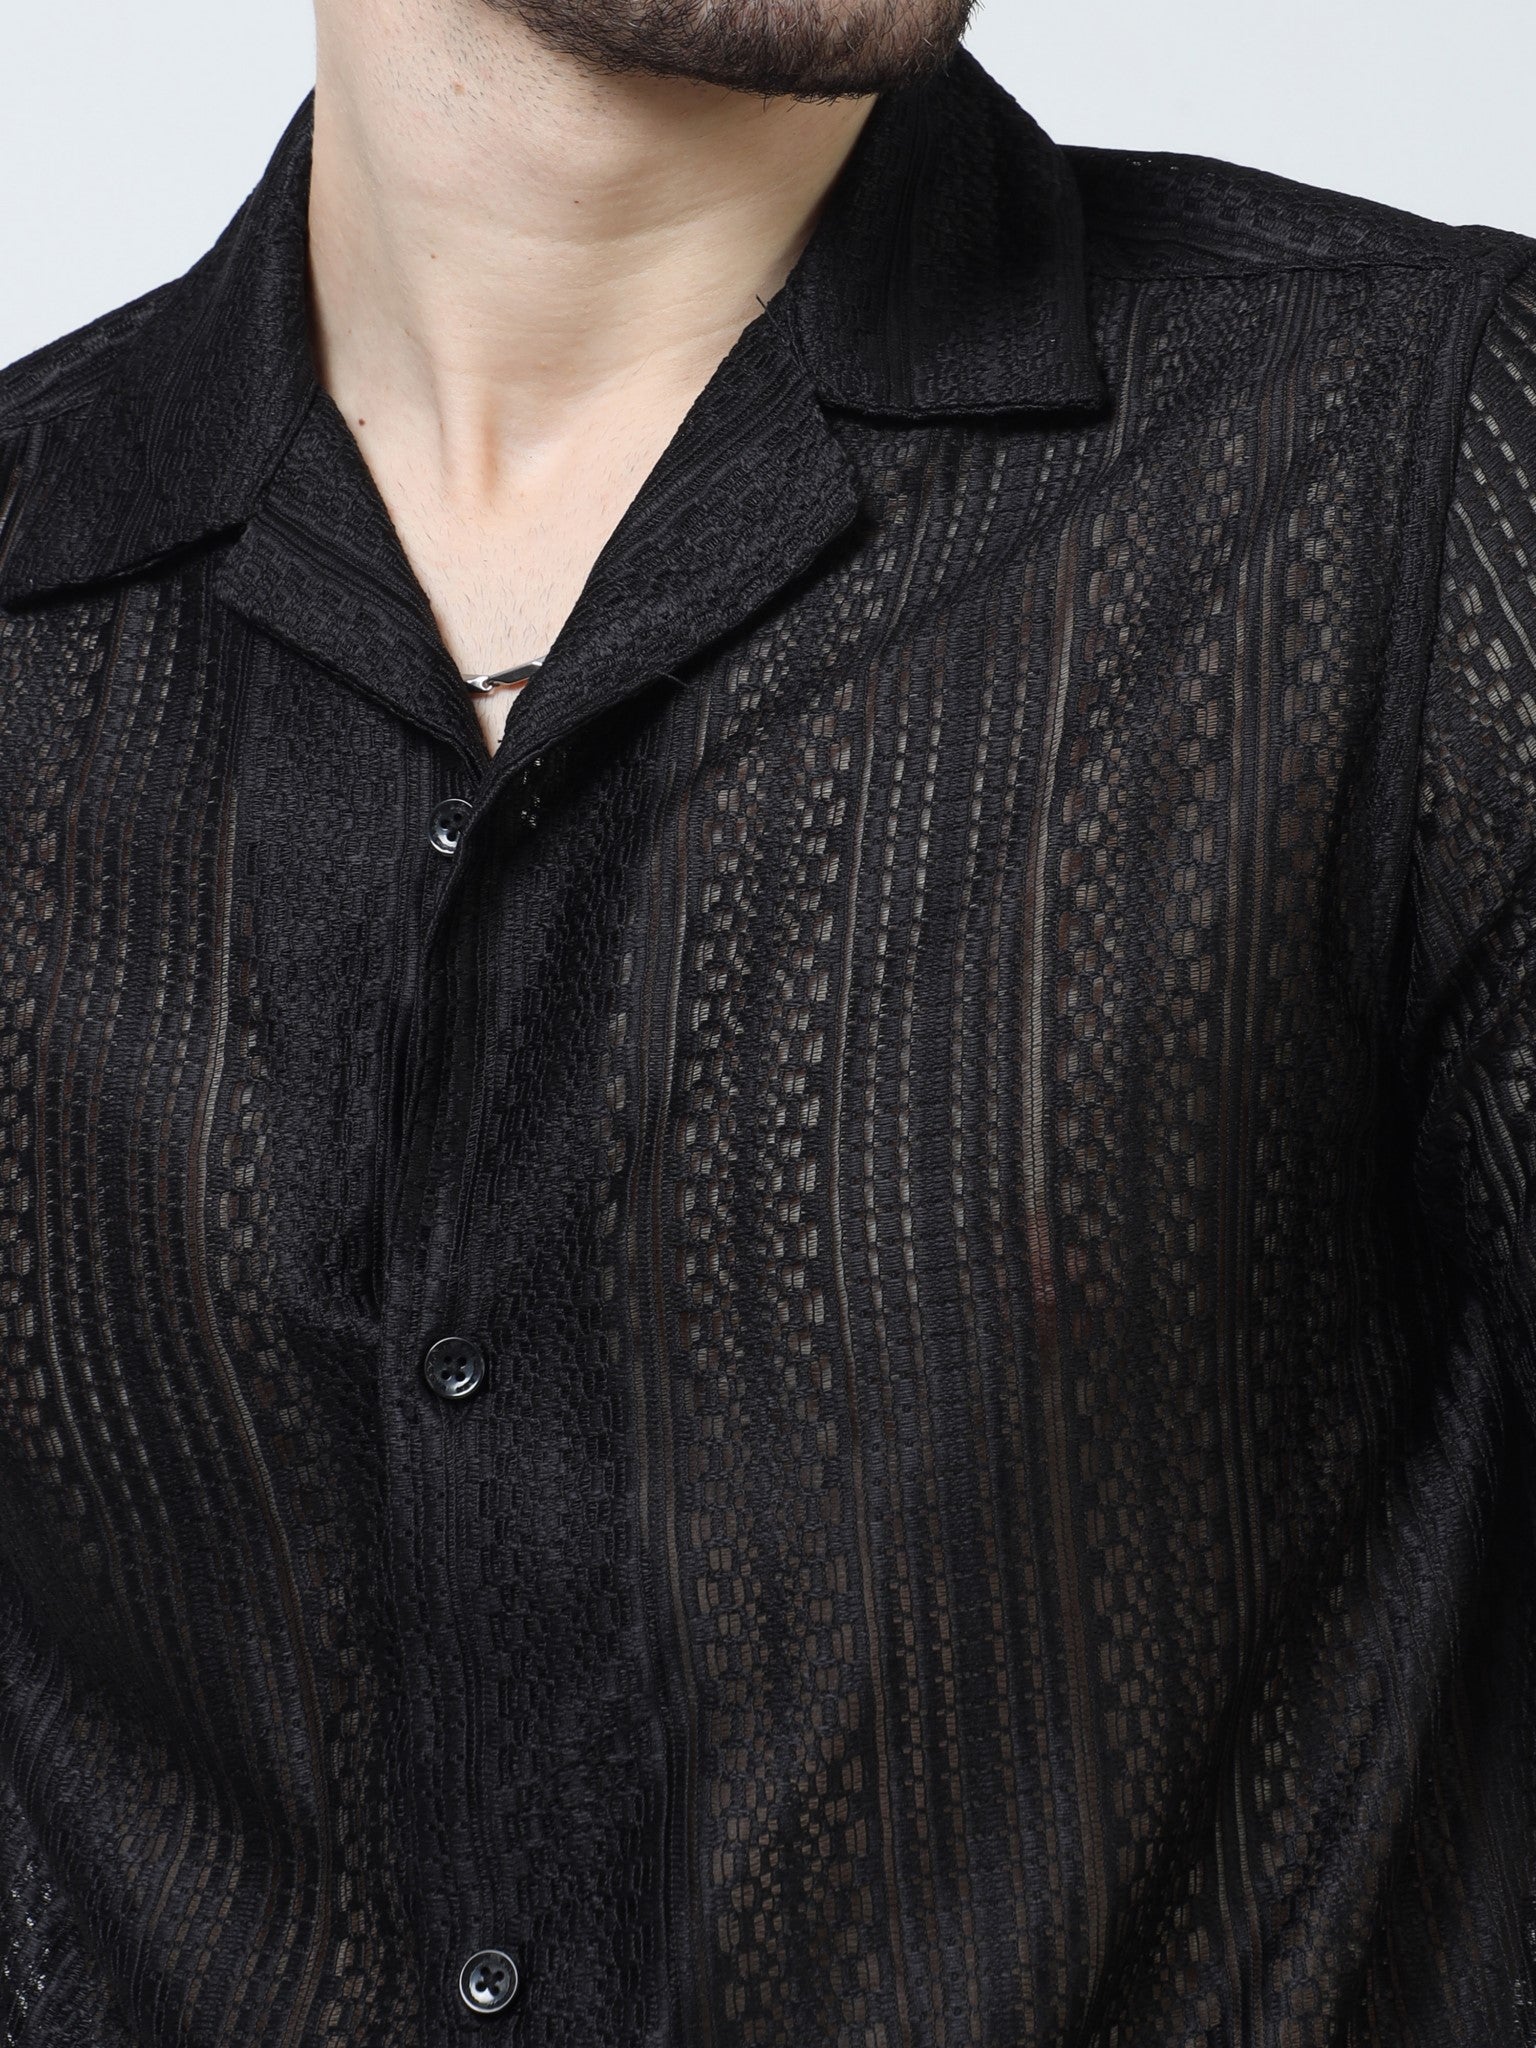 Drop Crochet Black Shirt for Men